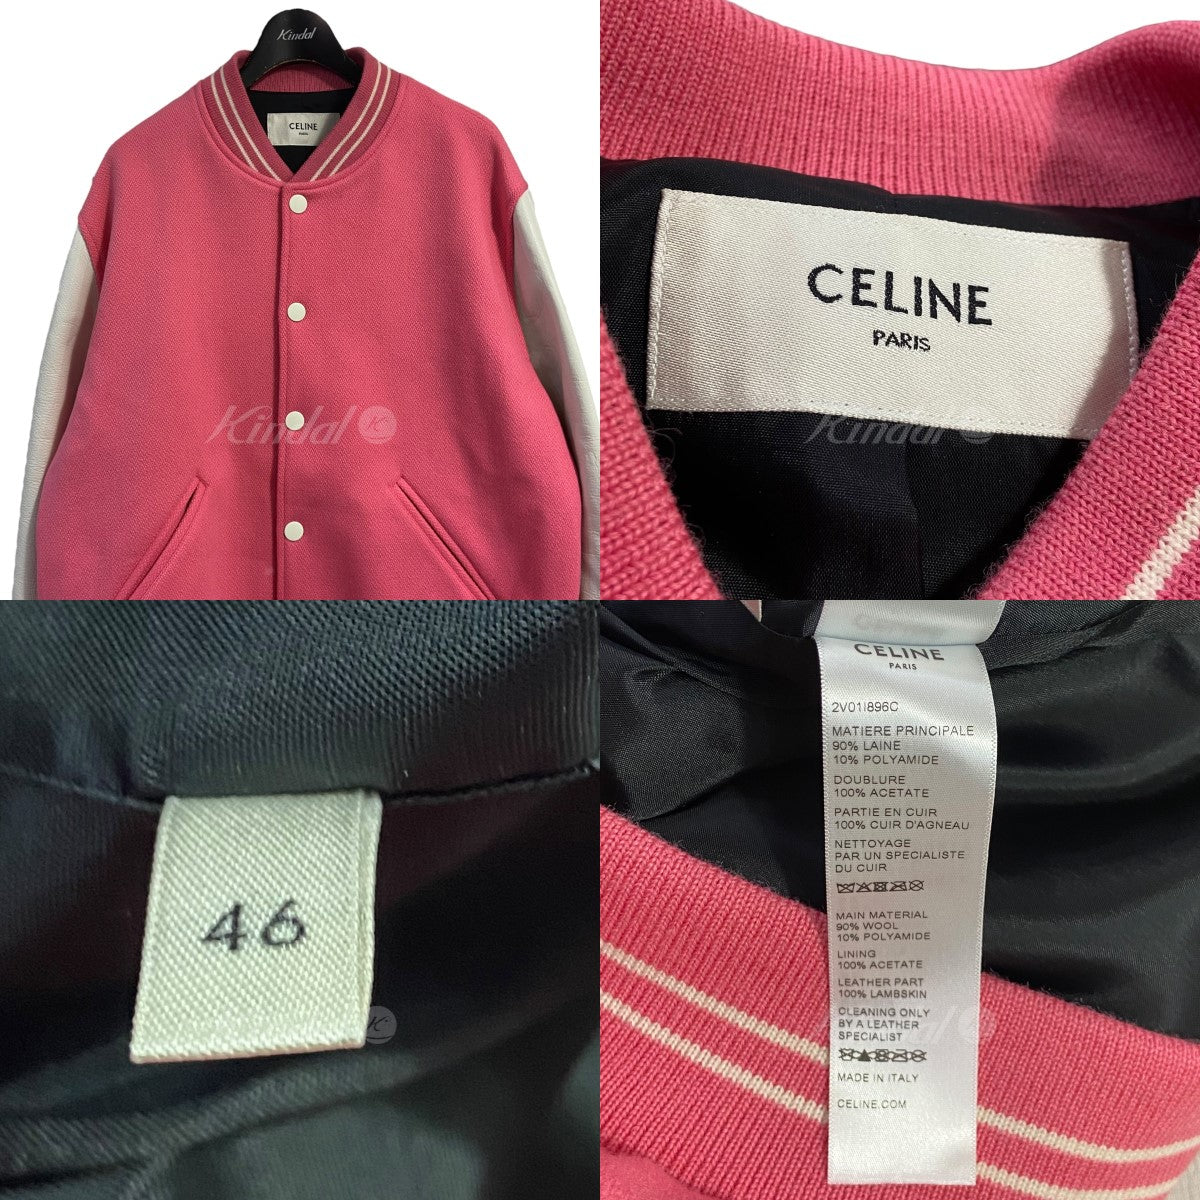 CELINE(セリーヌ) テディジャケット 2V01I896C ライトピンク サイズ 15 